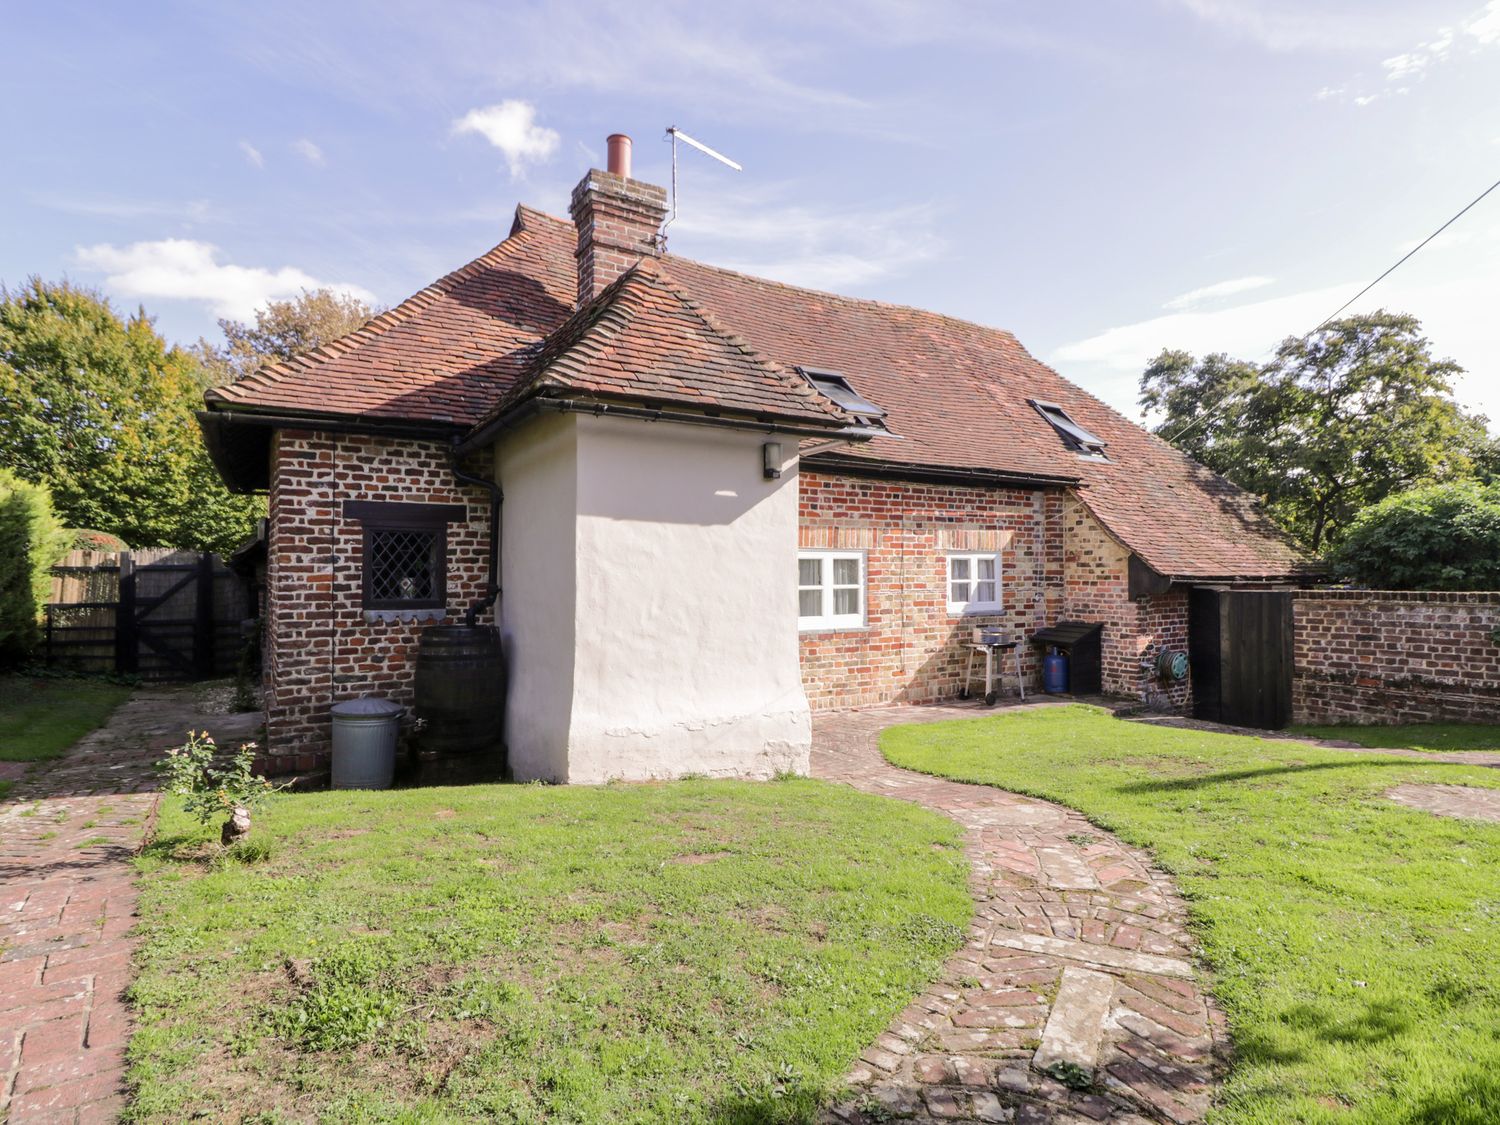 Home Farm House, South of England